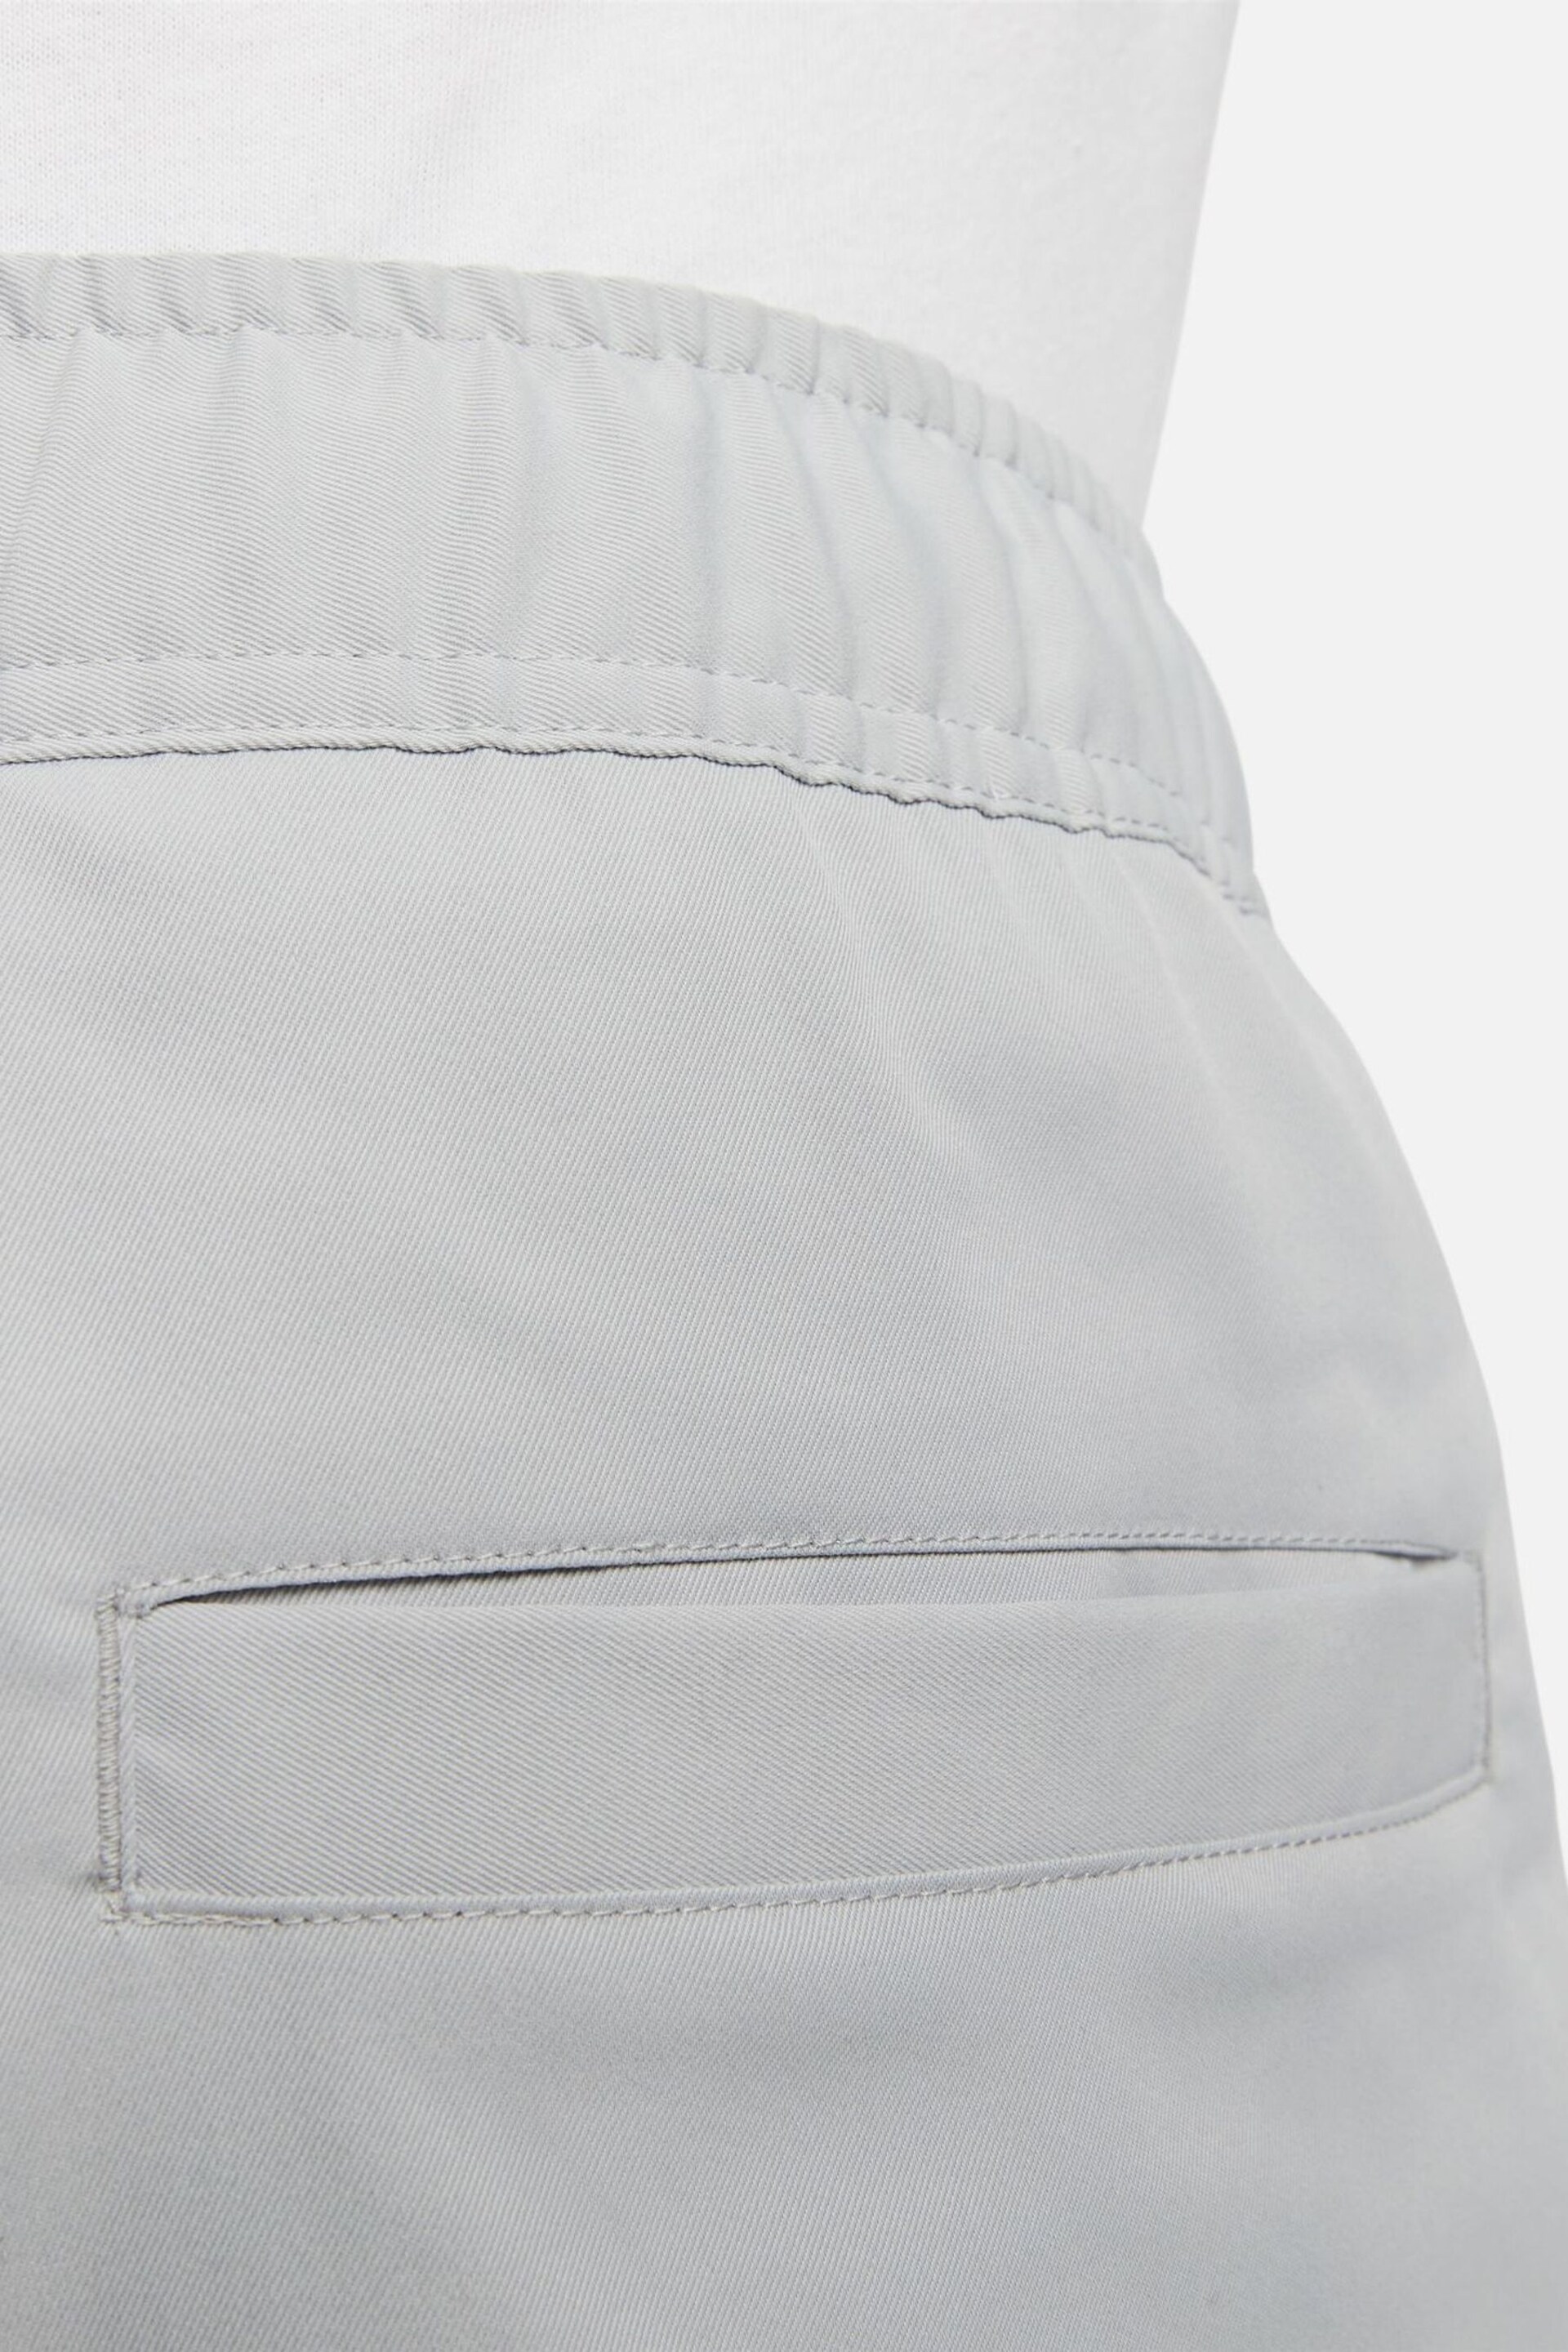 Nike Grey Club Woven Tapered Leg Pants - Image 2 of 5